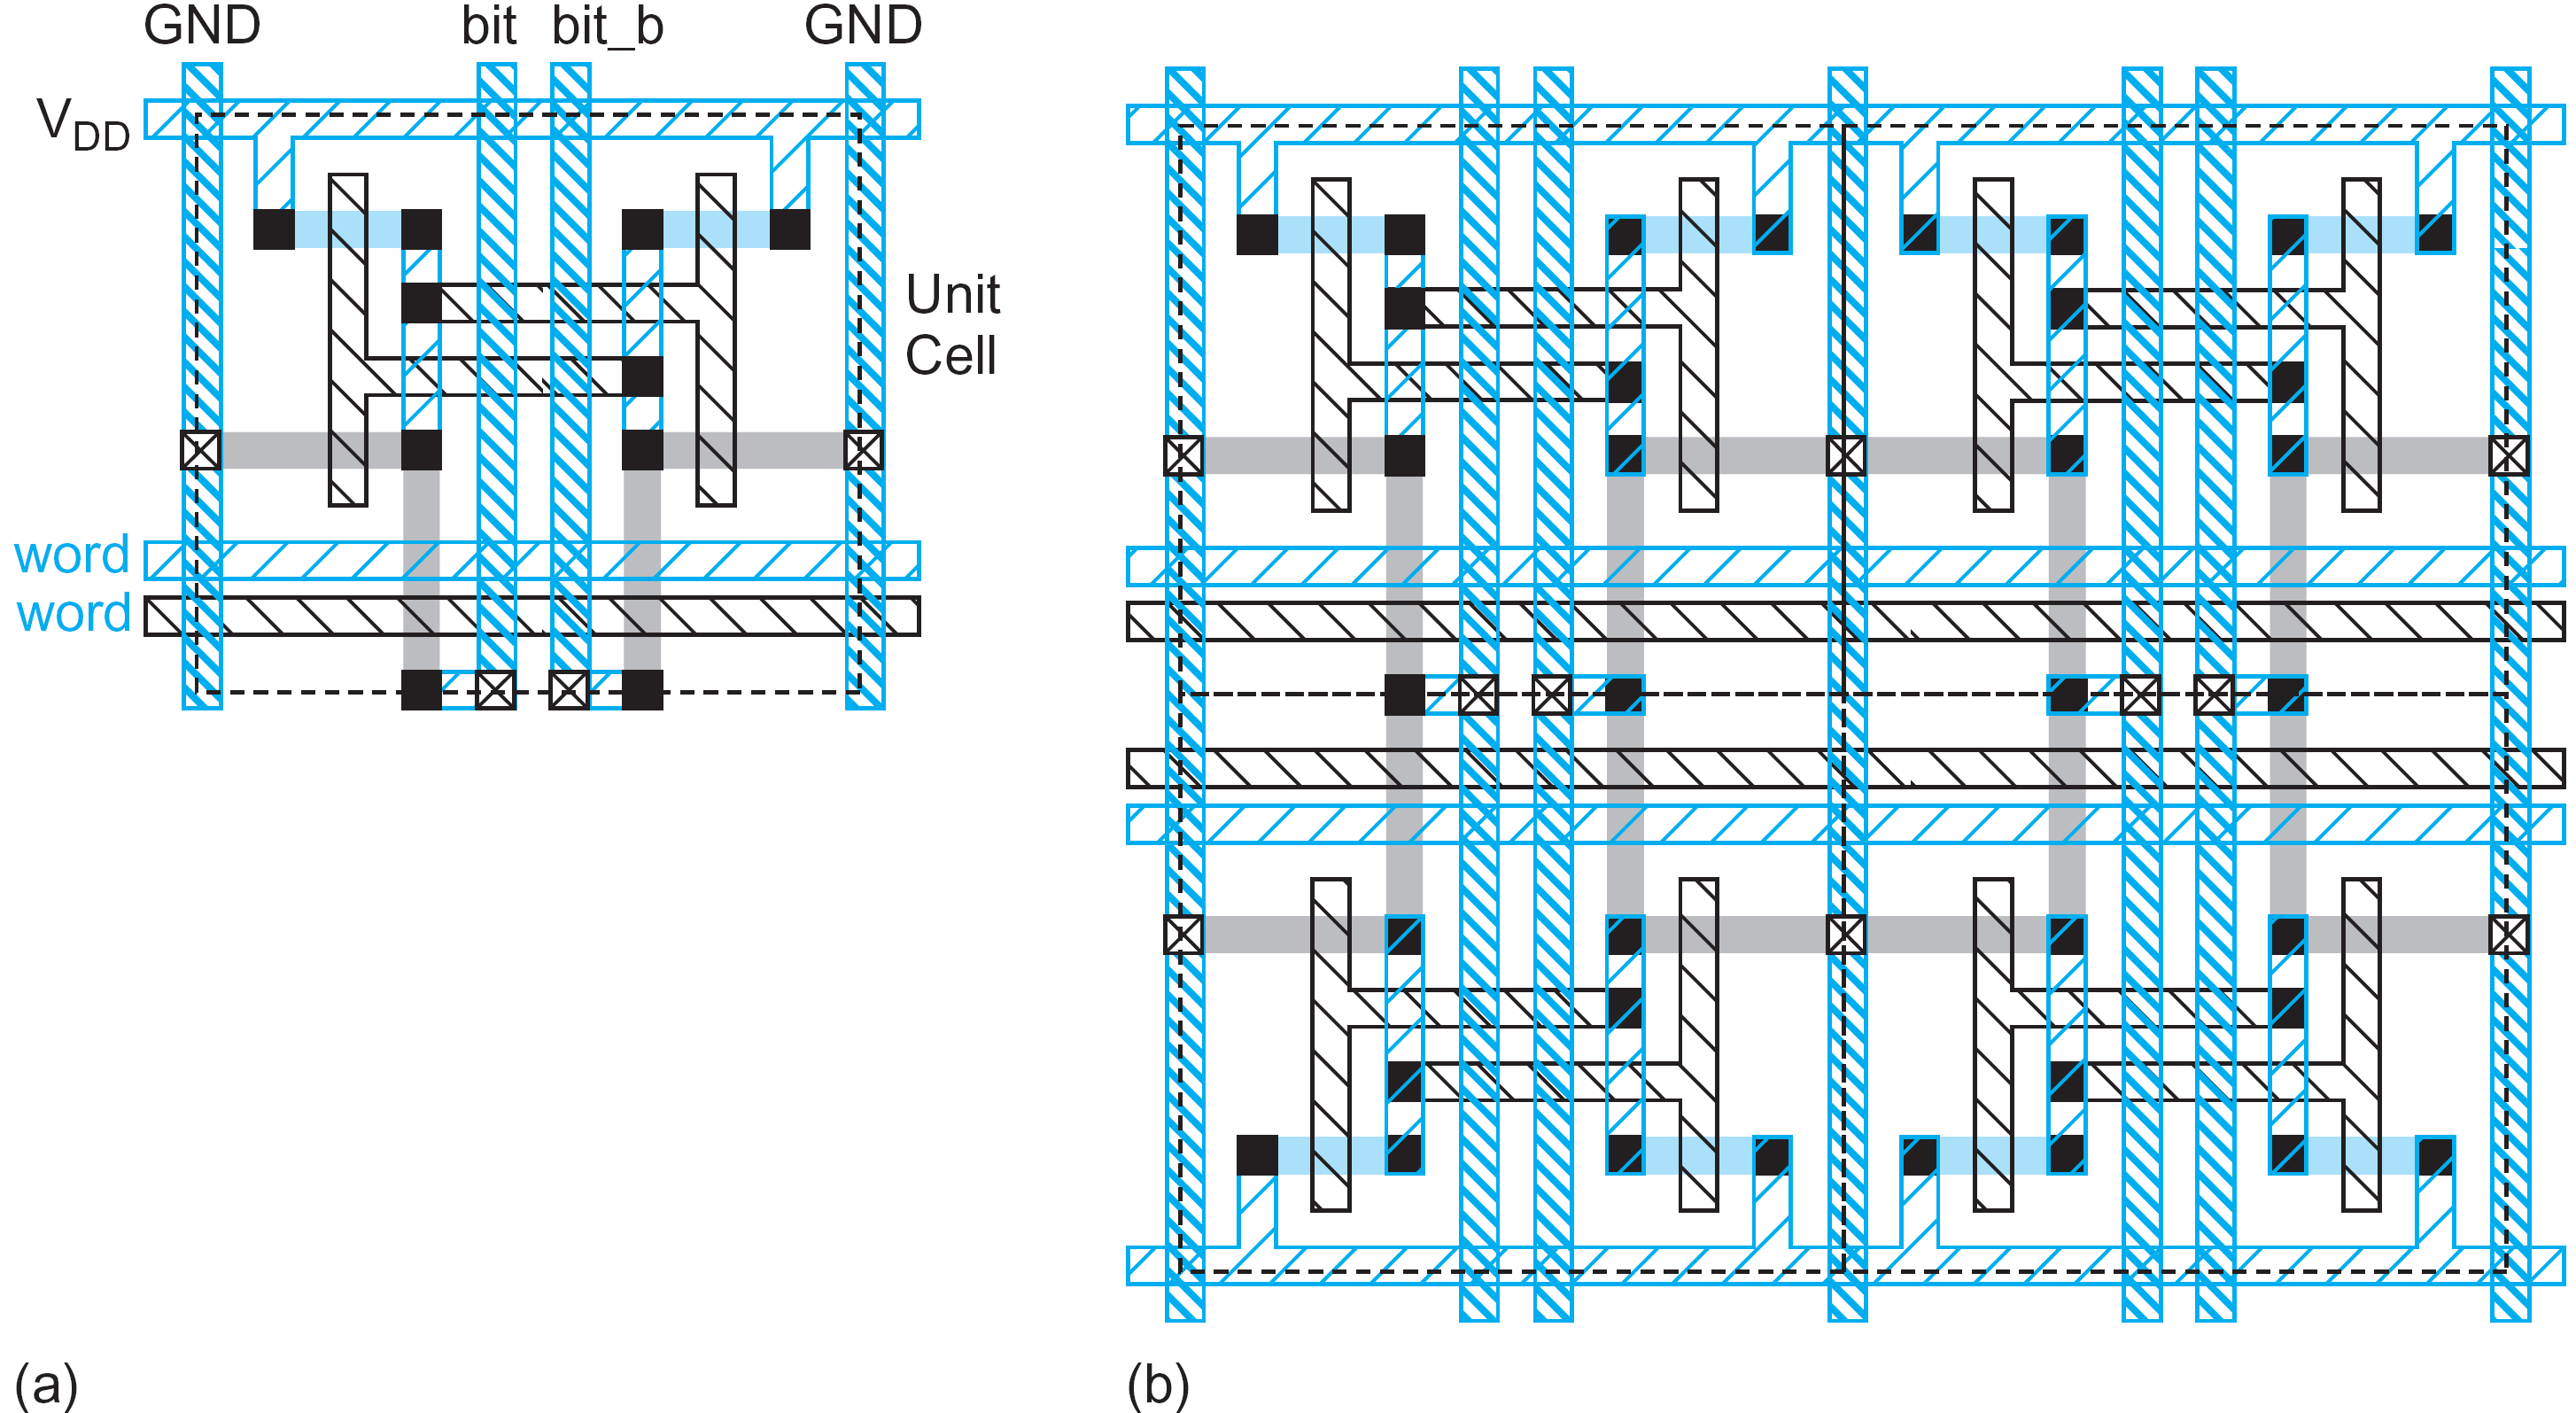 SRAM Layout Συμμετρική και με επικάλυψη για να μοιράζονται οι γραμμές V DD, GND σε γειτονικά